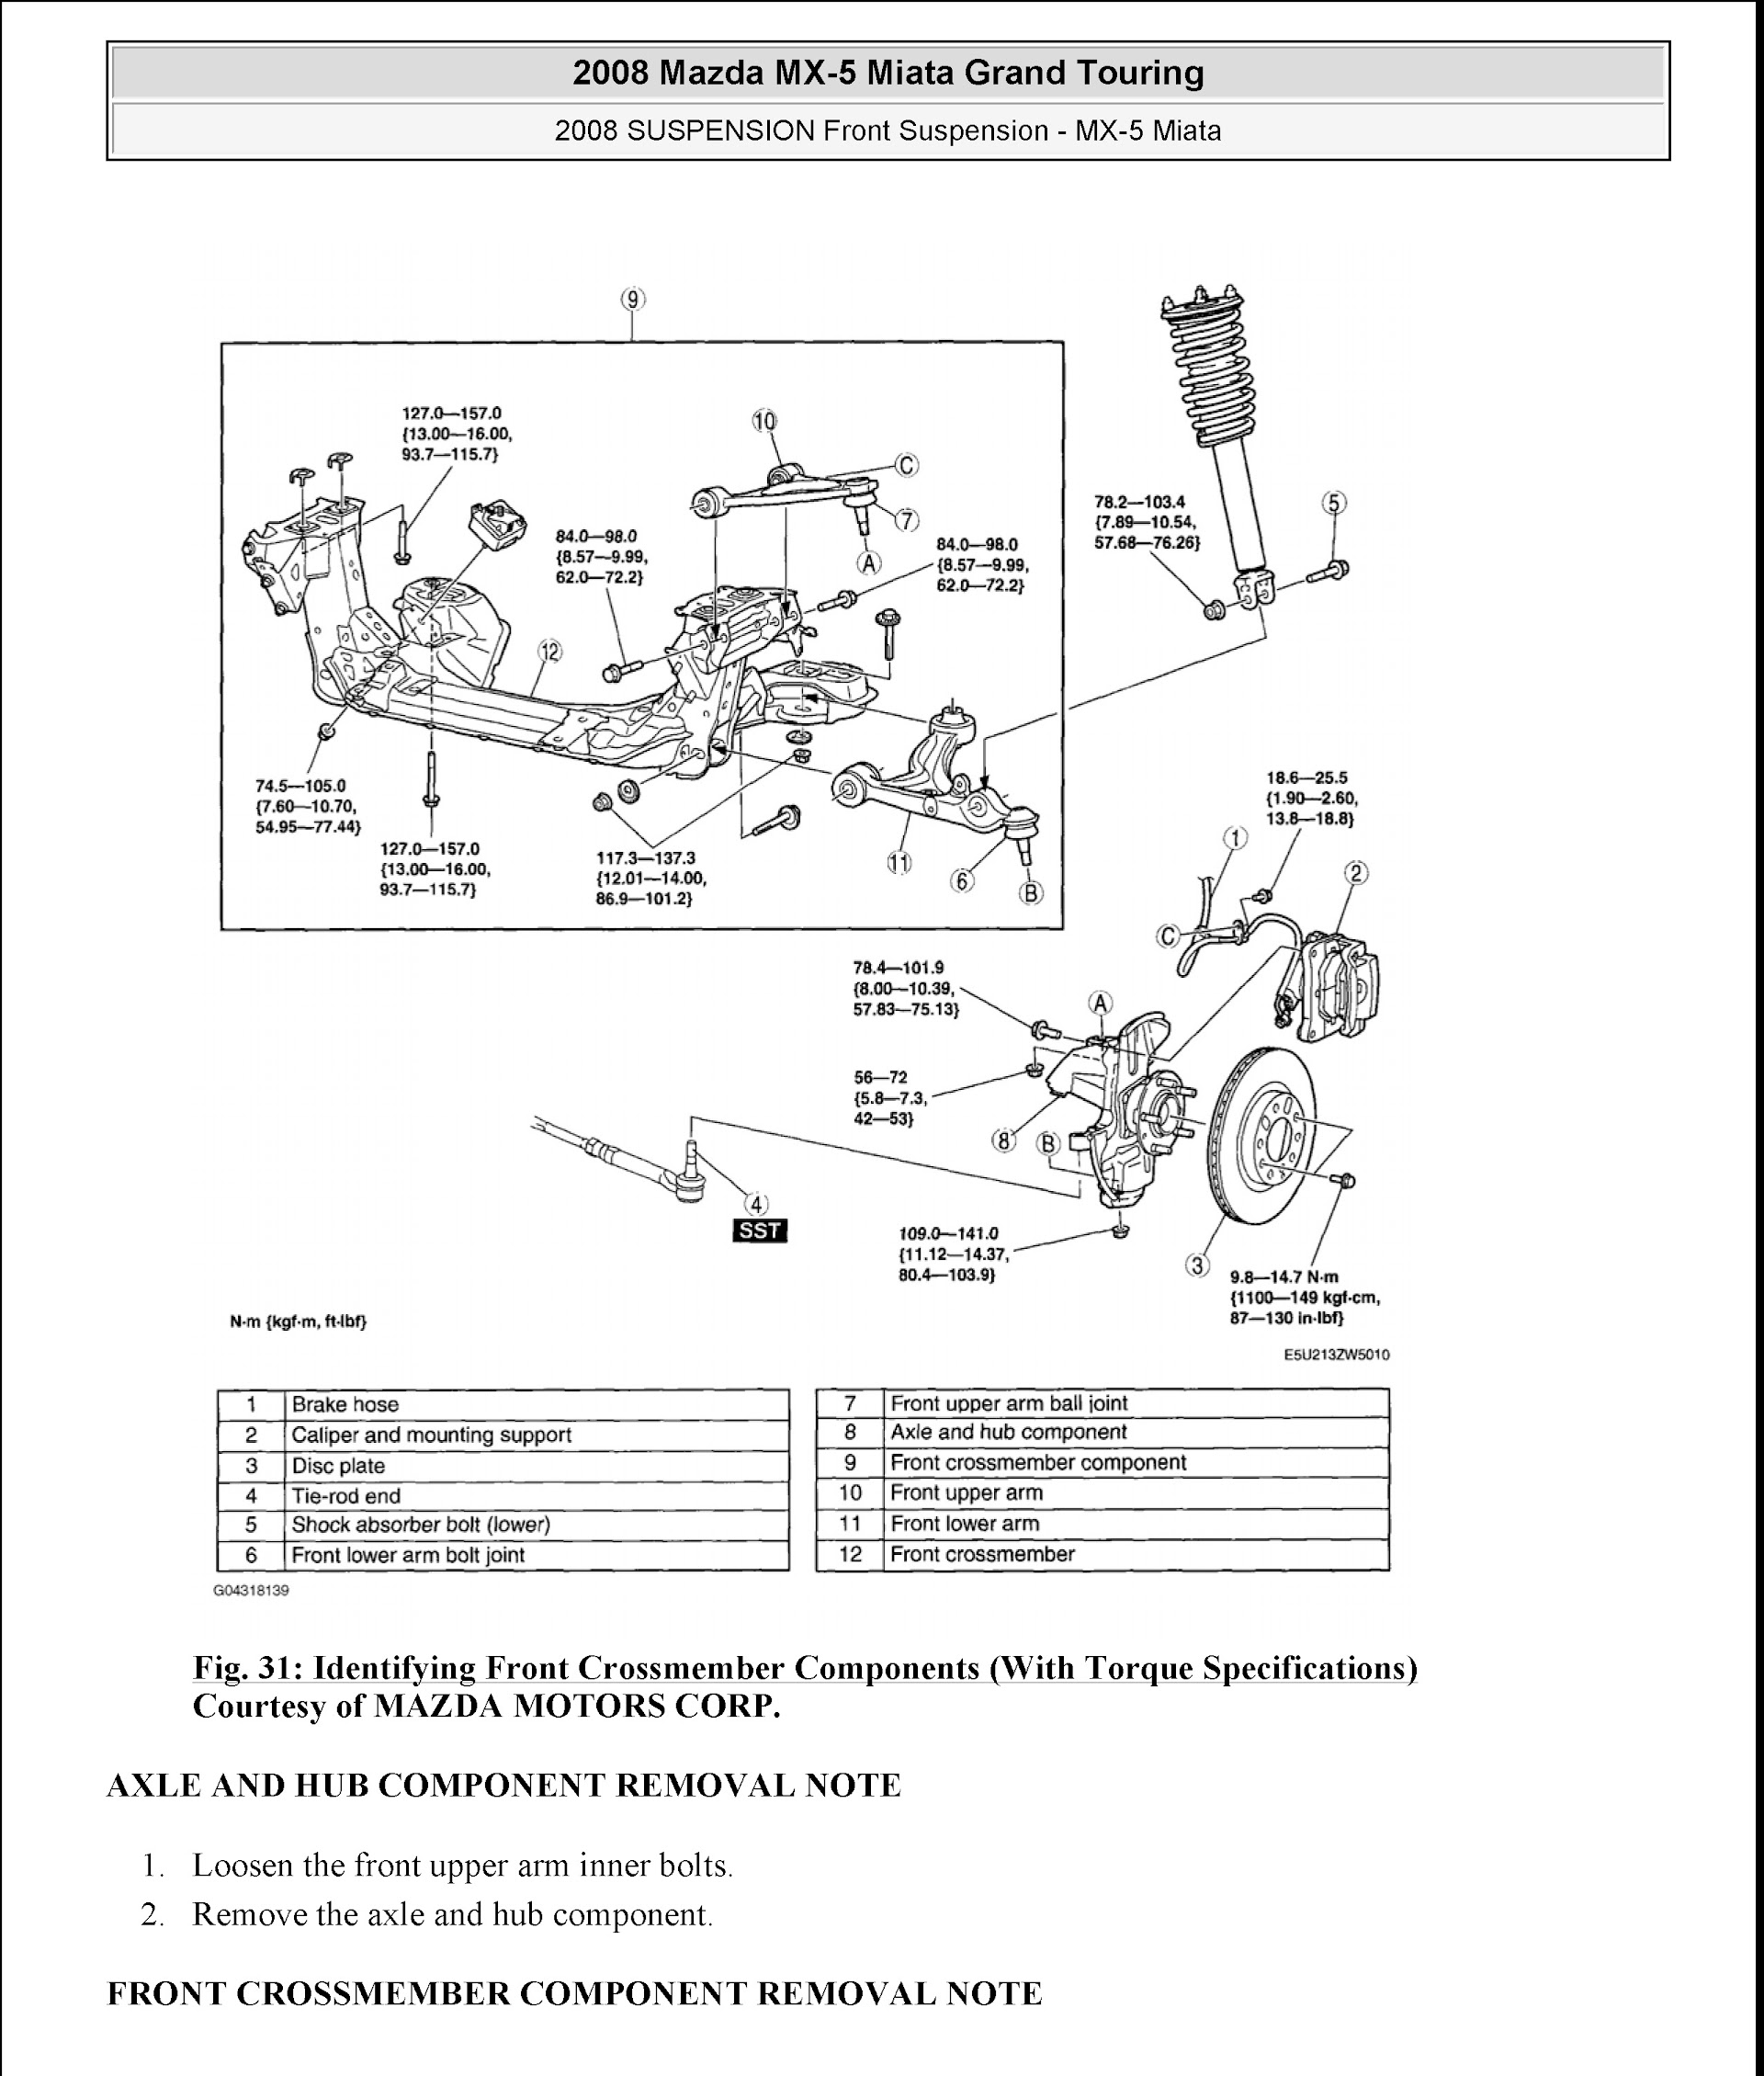 Download 2008-2009 Mazda Miata MX-5 Service Repair Manual